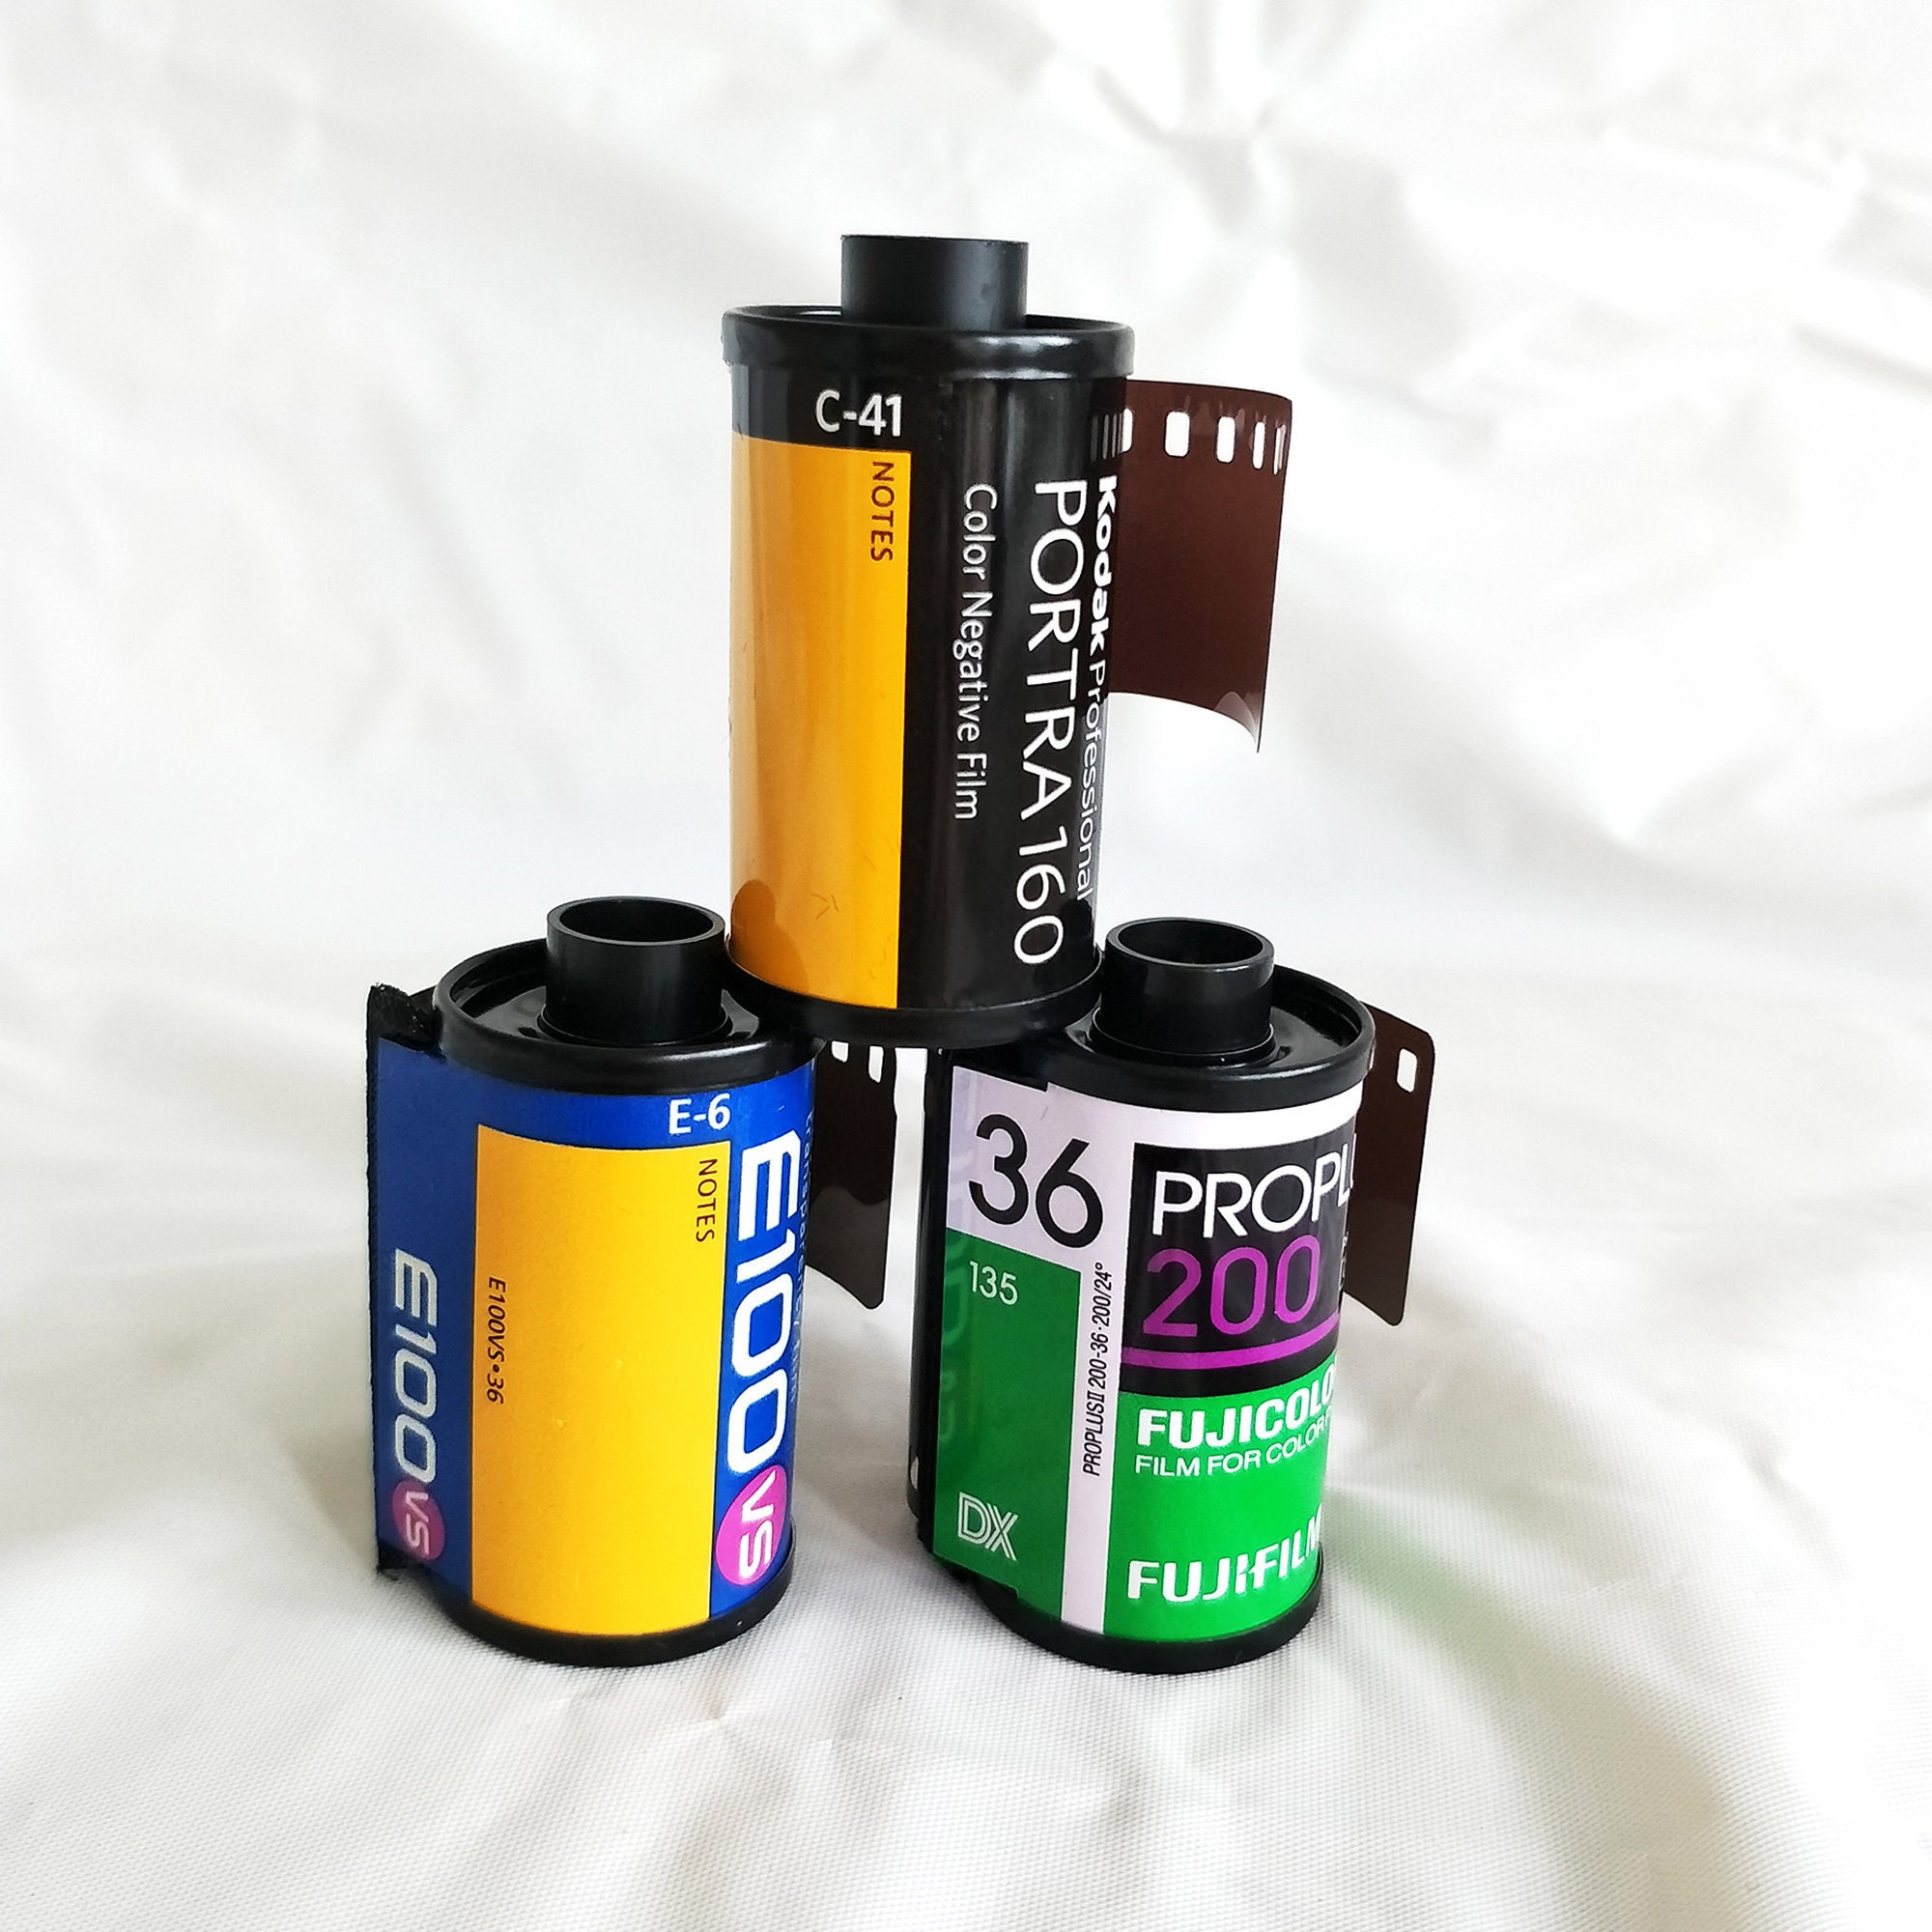 Agfa Job lot of 10x mixed 35mm colour negative films C41 Fuji Agfa Kodak 